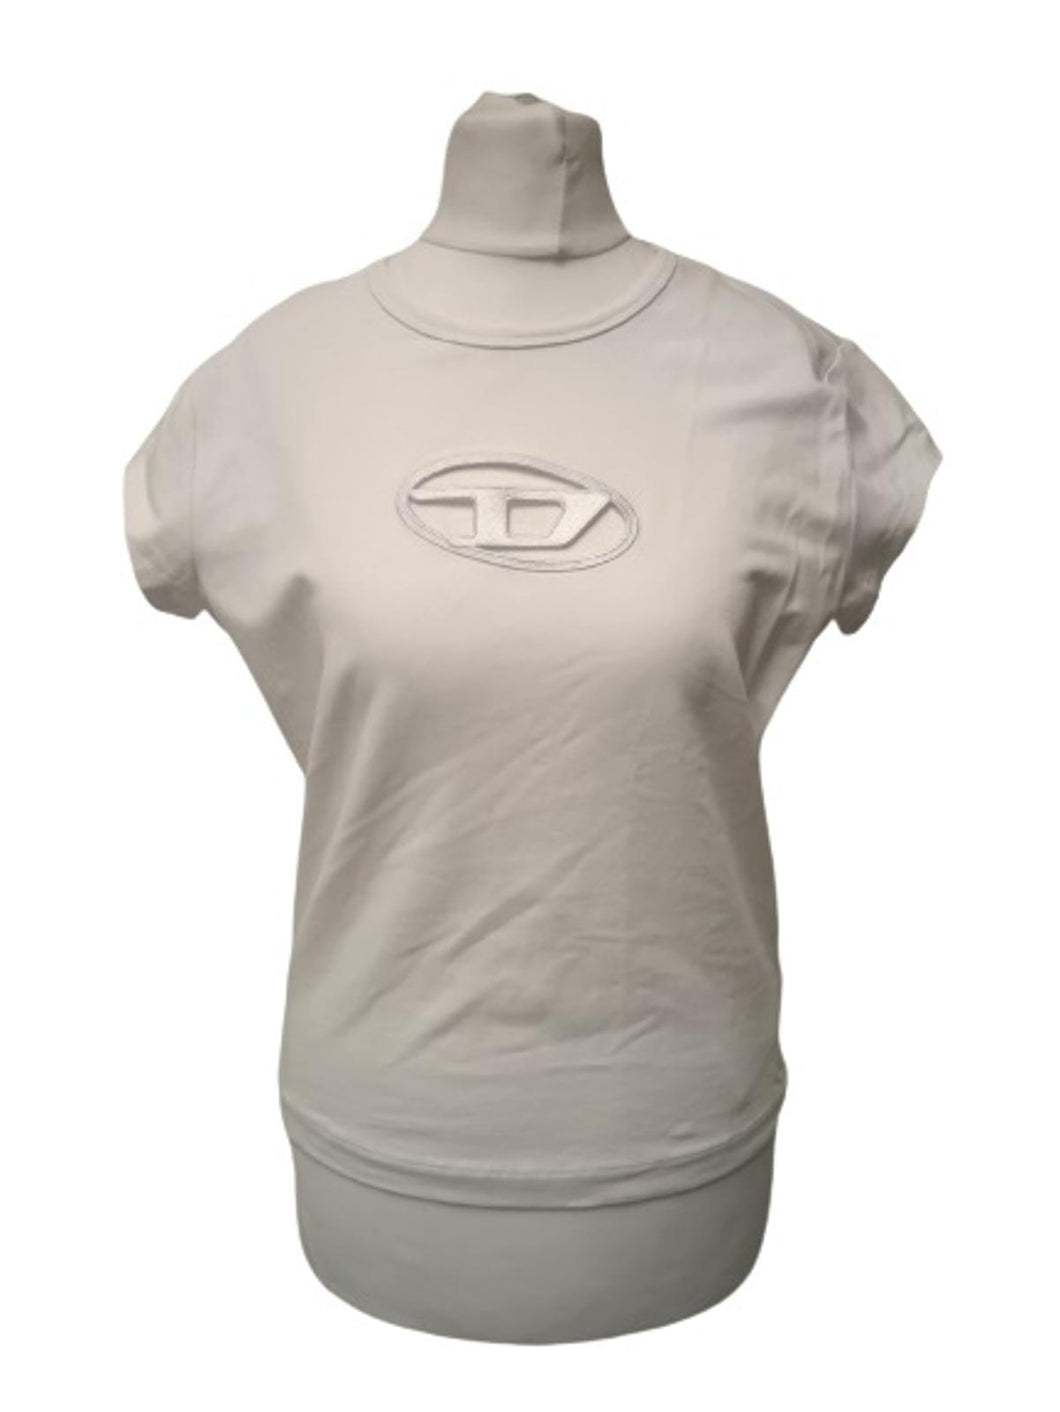 DIESEL Ladies White Cotton Blend Slim Fit T-Angie Cut-Out Logo T-Shirt L BNWT